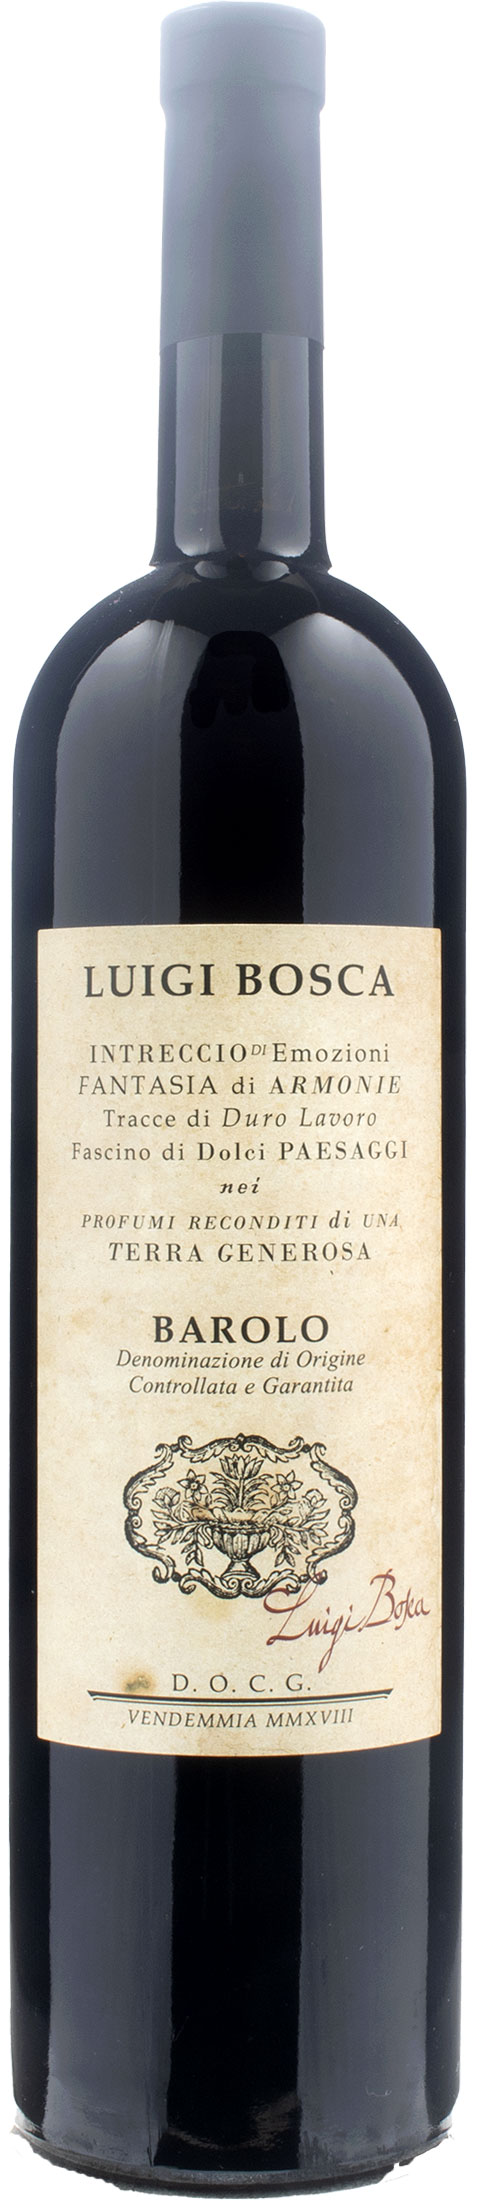 Bosca Barolo “Luigi Bosca” 2018